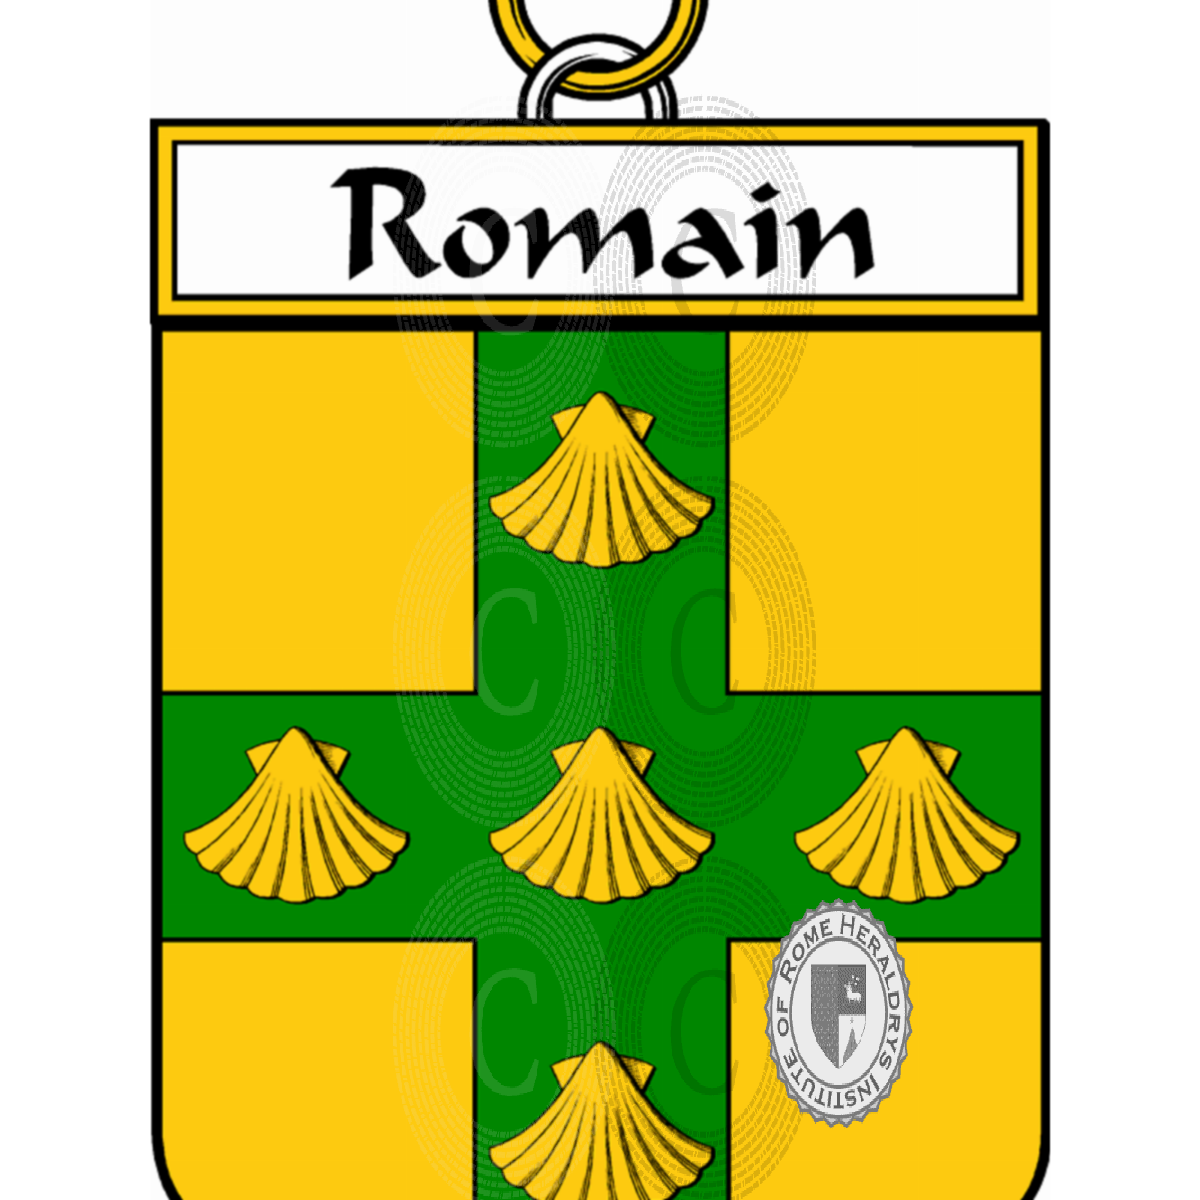 Wappen der Familiede Romain, de Romain,Romanel